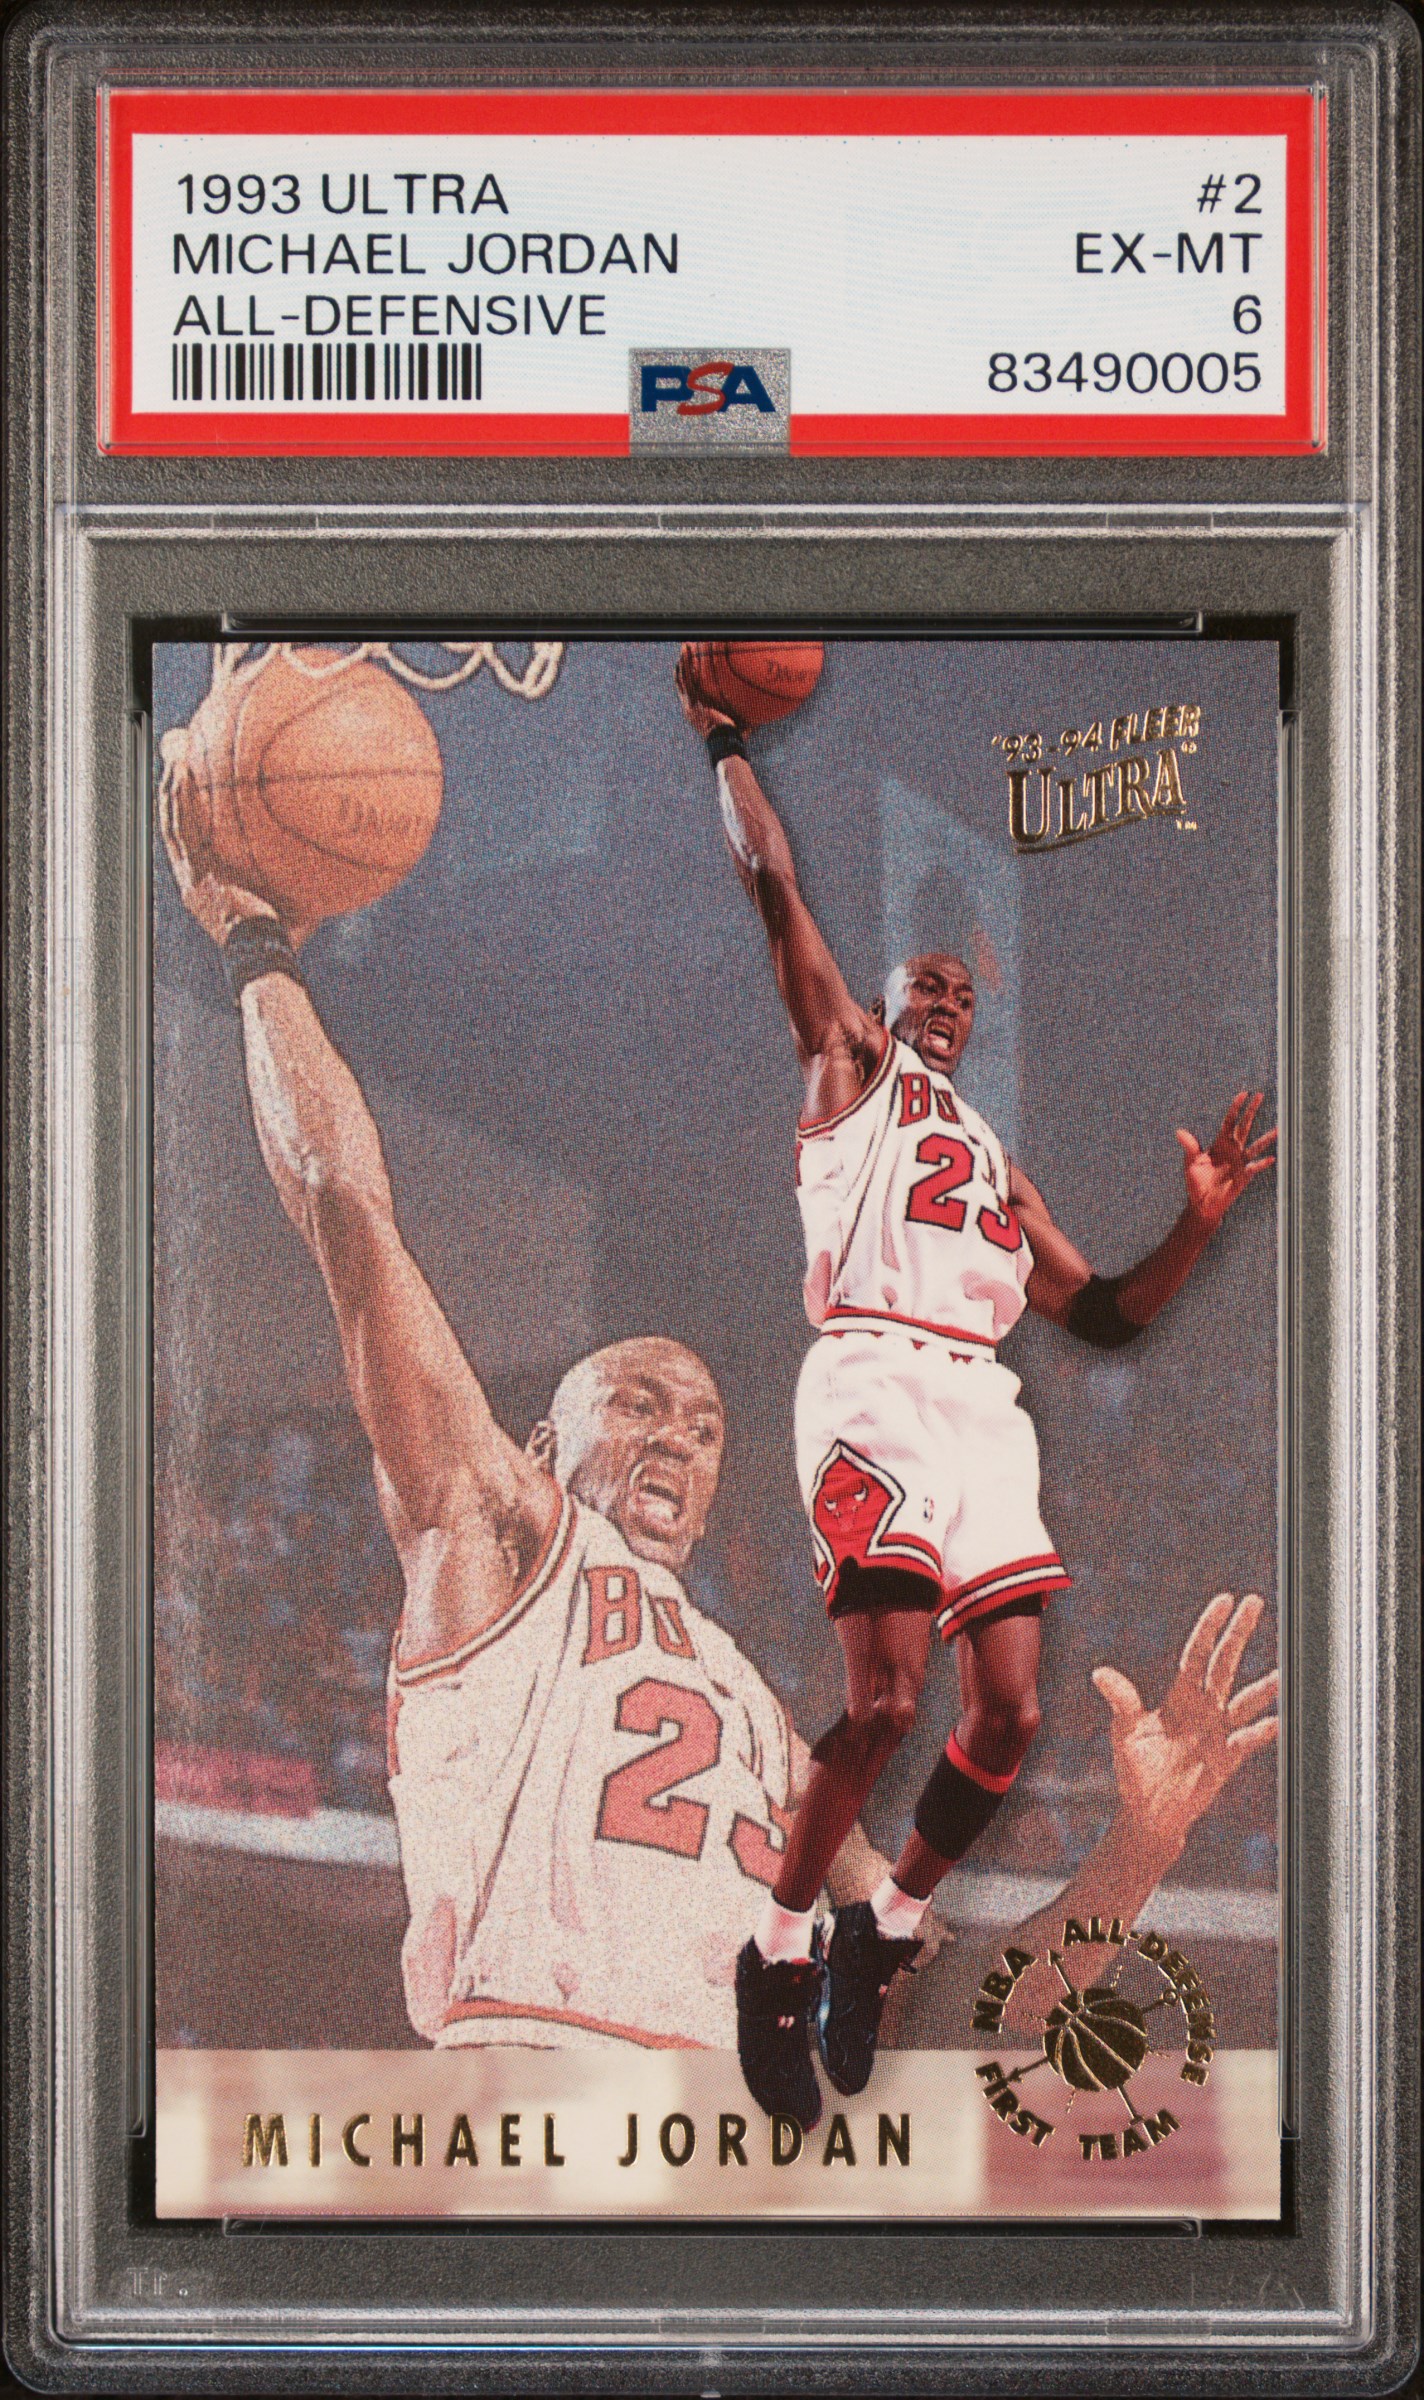 1993 Ultra All-Defensive #2 Michael Jordan PSA 6